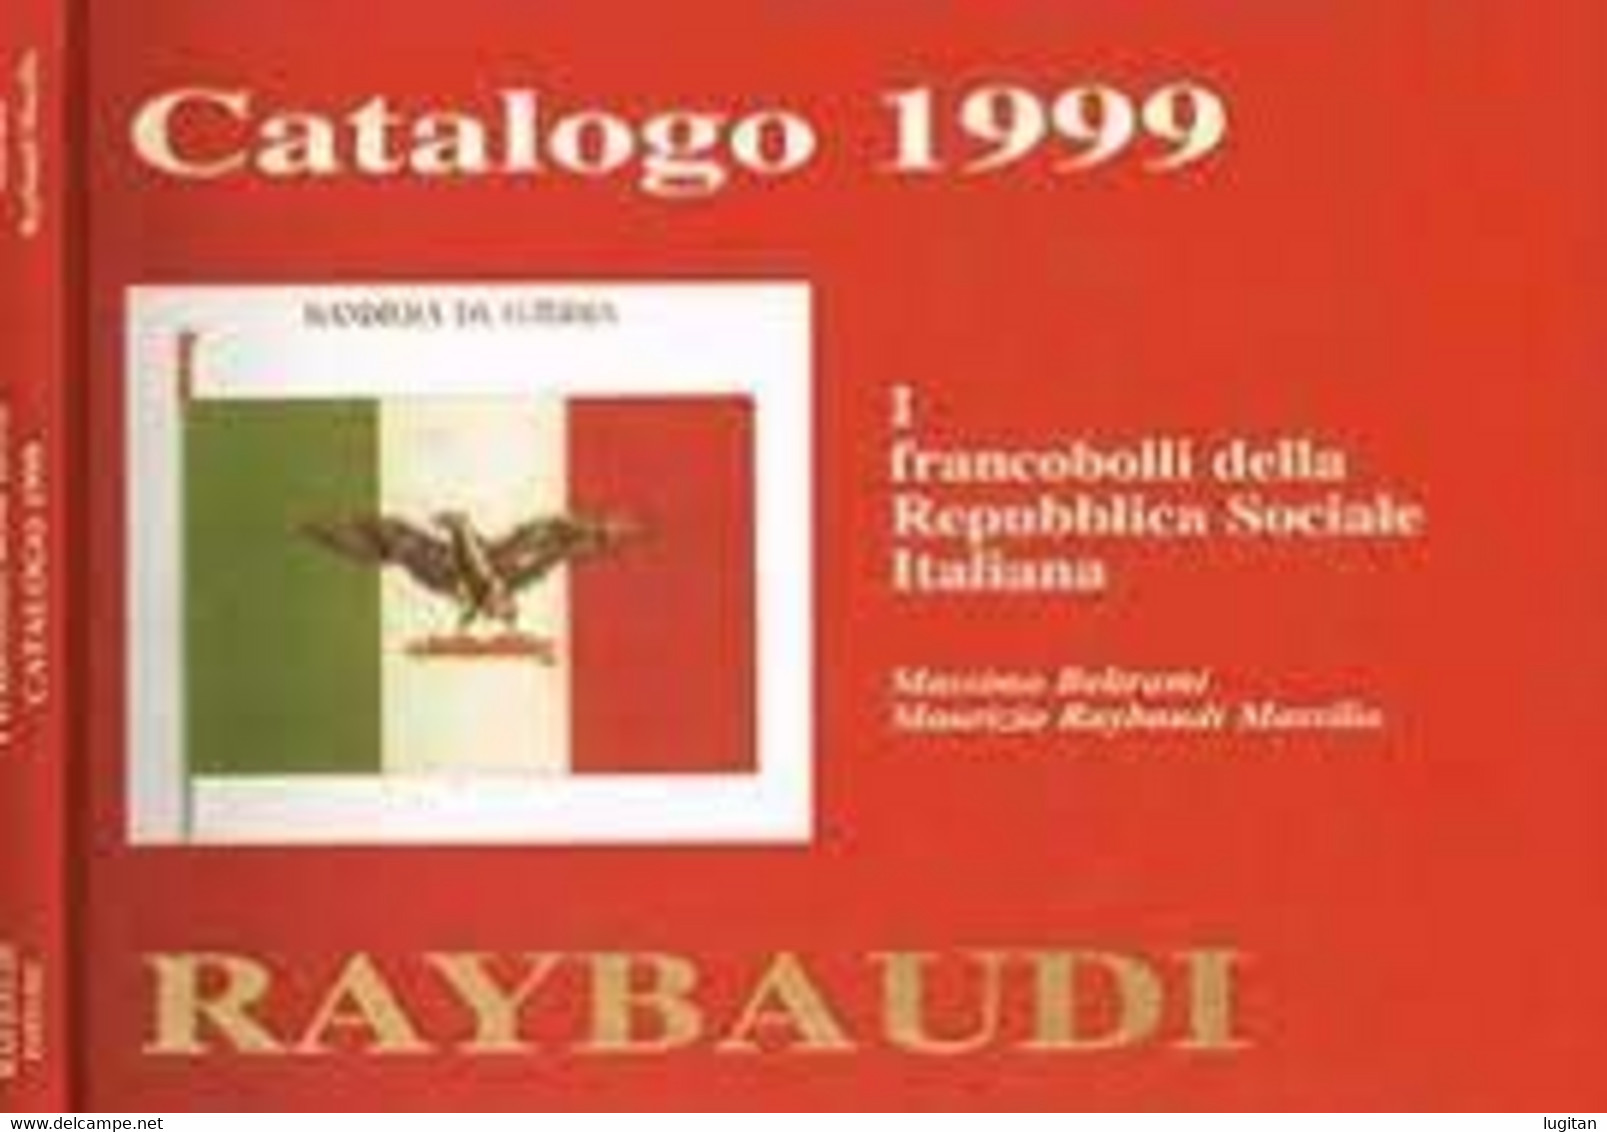 CATALOGO 1999 - I FRANCOBOLLI DELLE REPUBBLICA SOCIALE - RAYBAUDI - Oorlog 1939-45